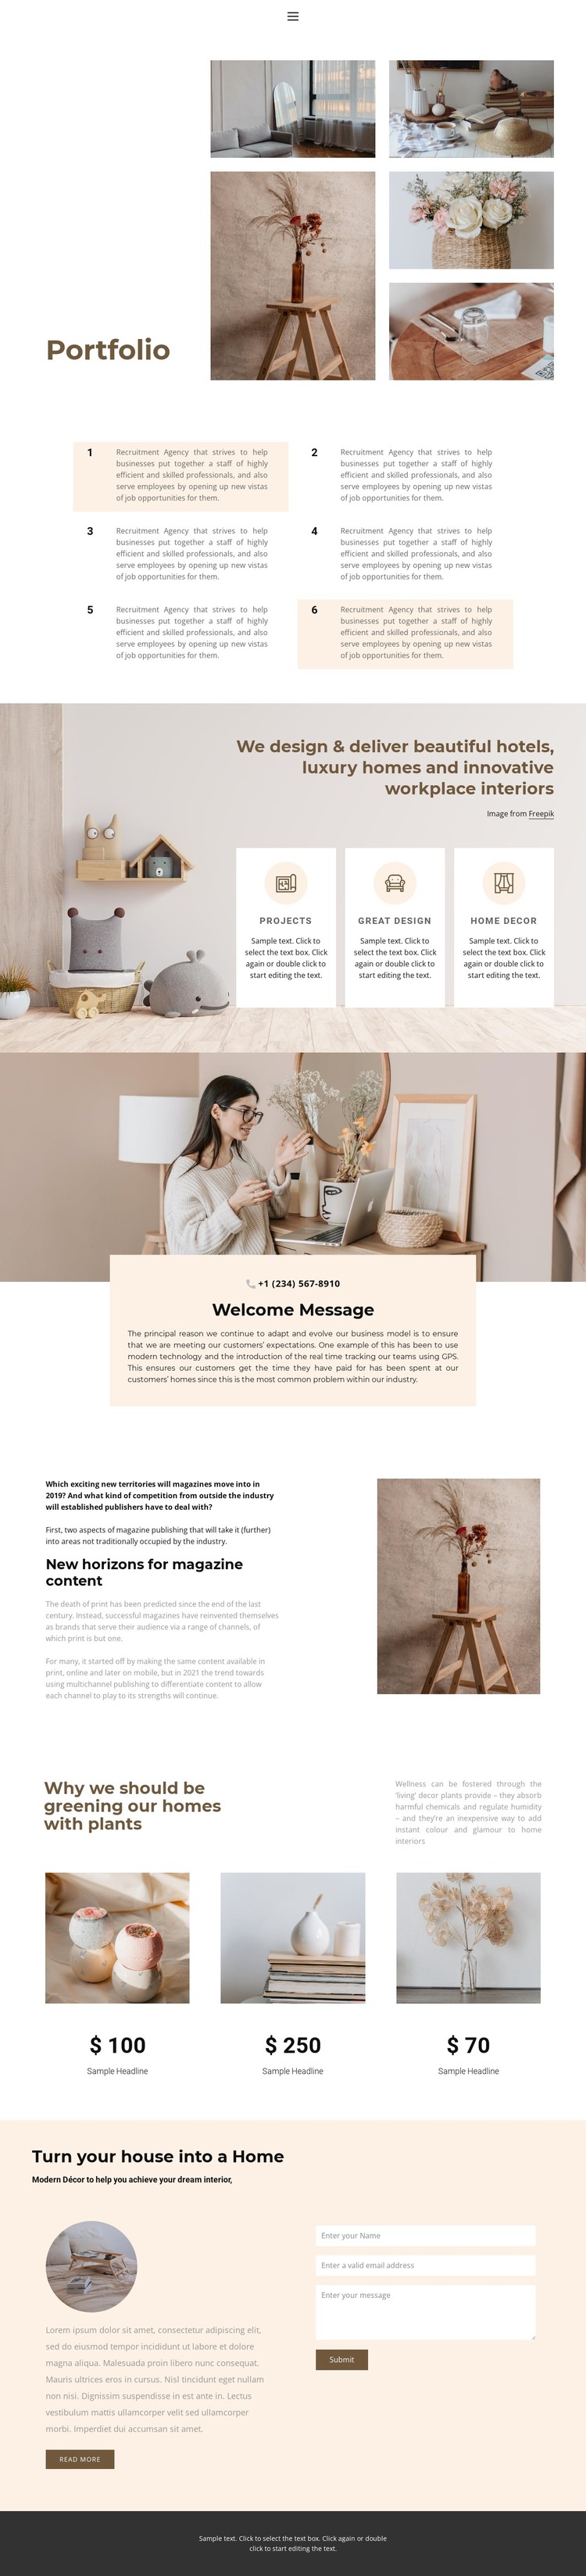 Decorate your home WordPress Theme